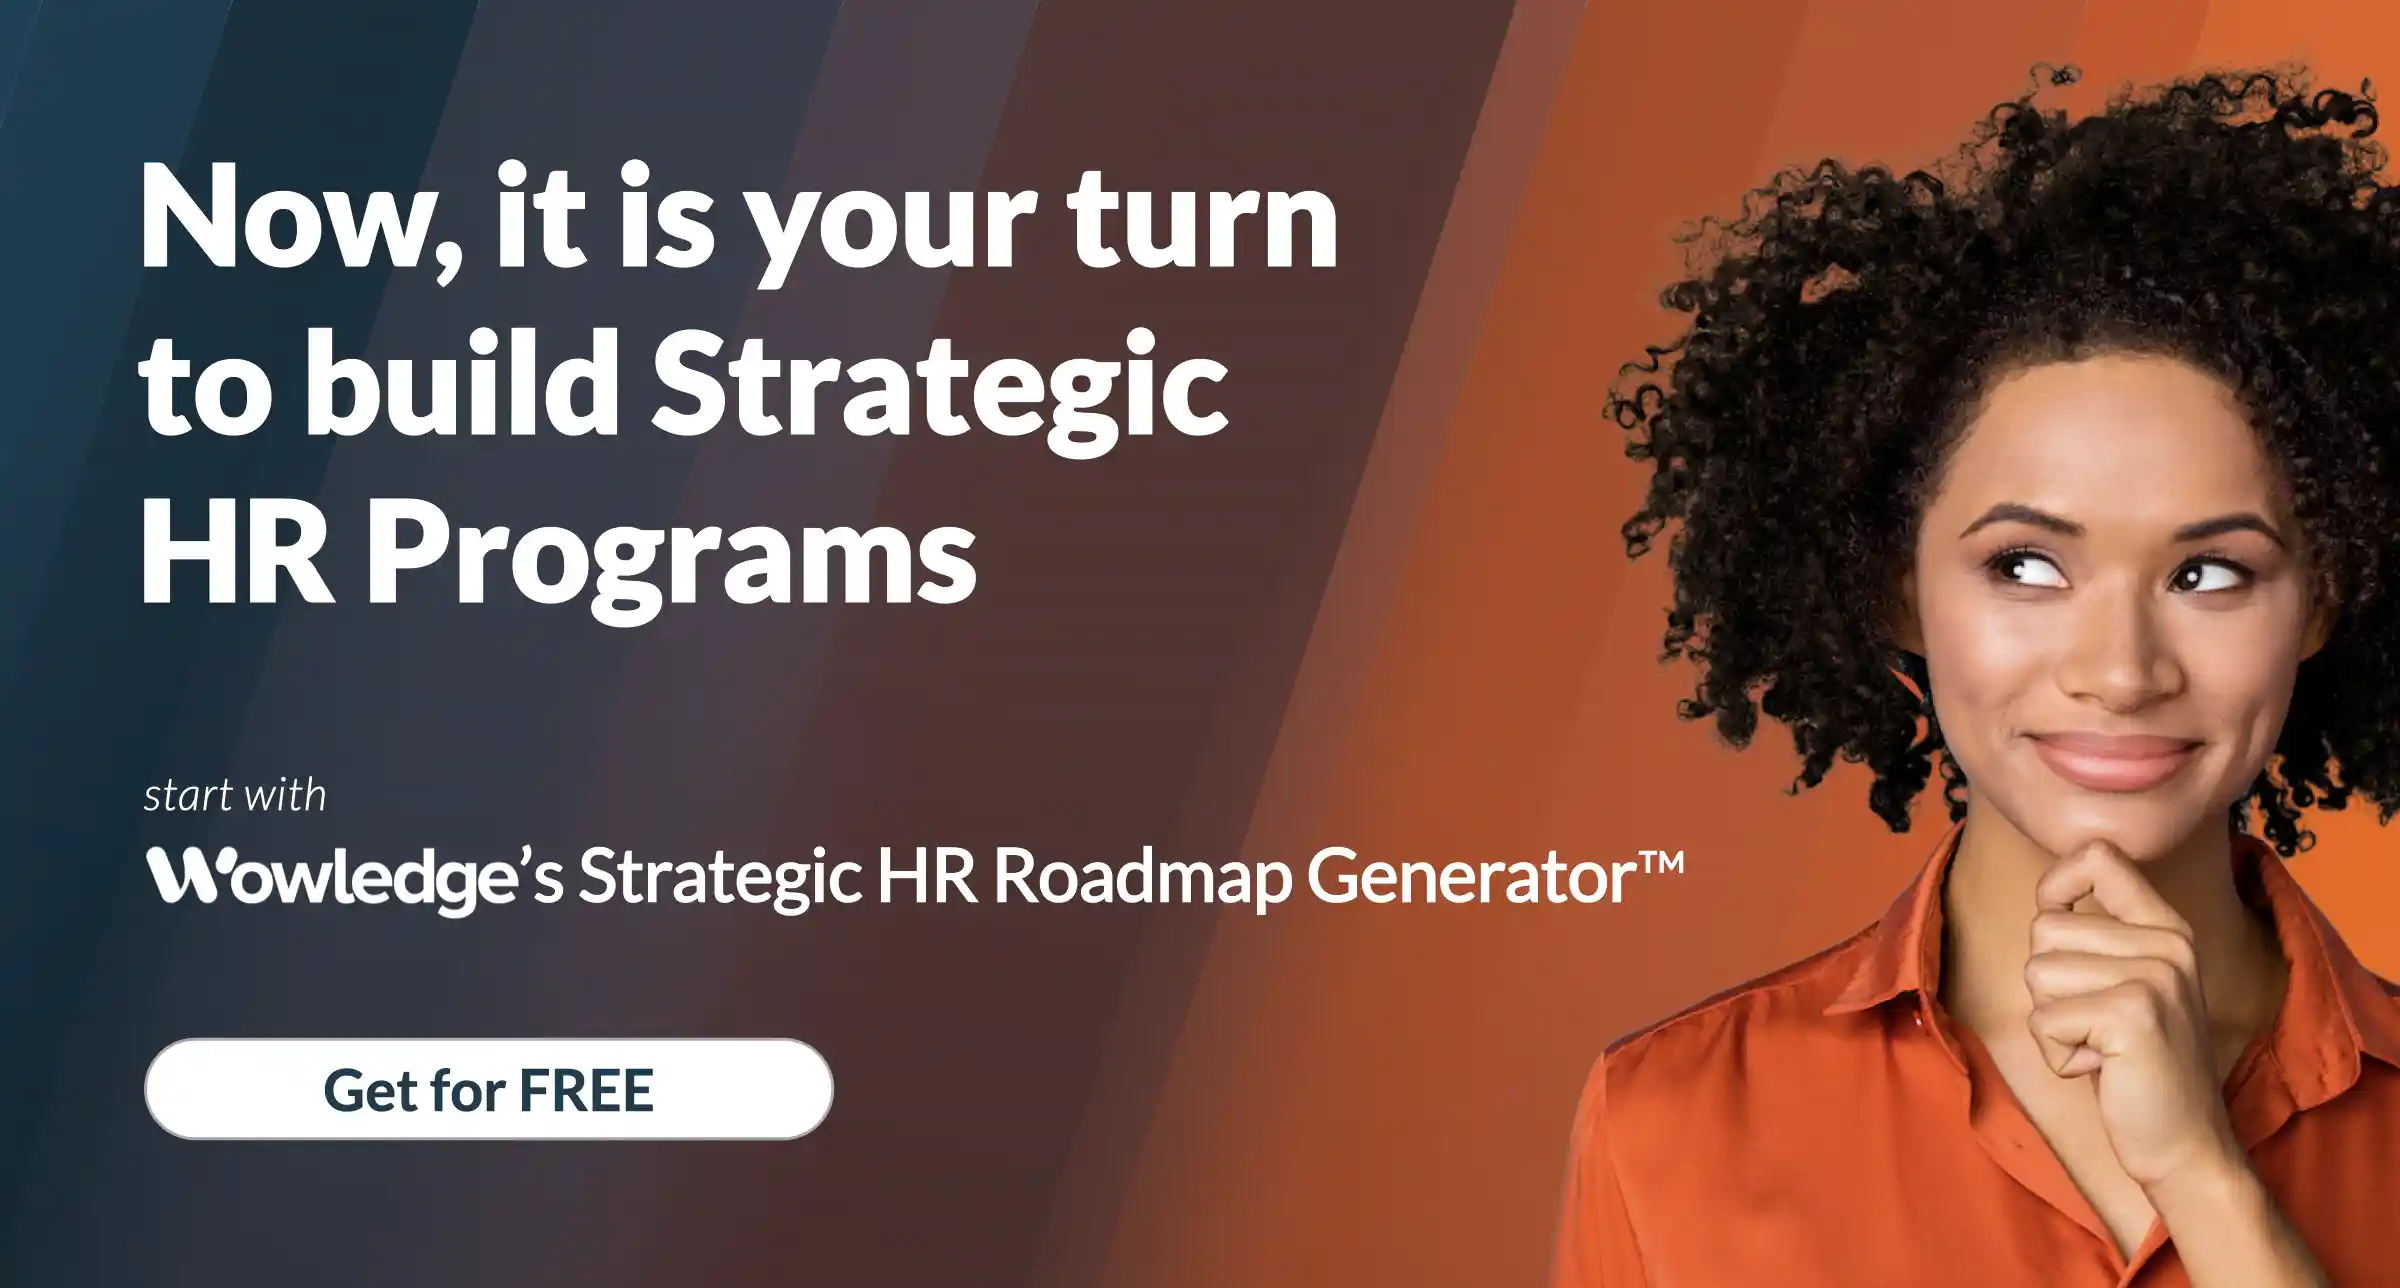 Wowledge's Strategic HR Roadmap Generator™